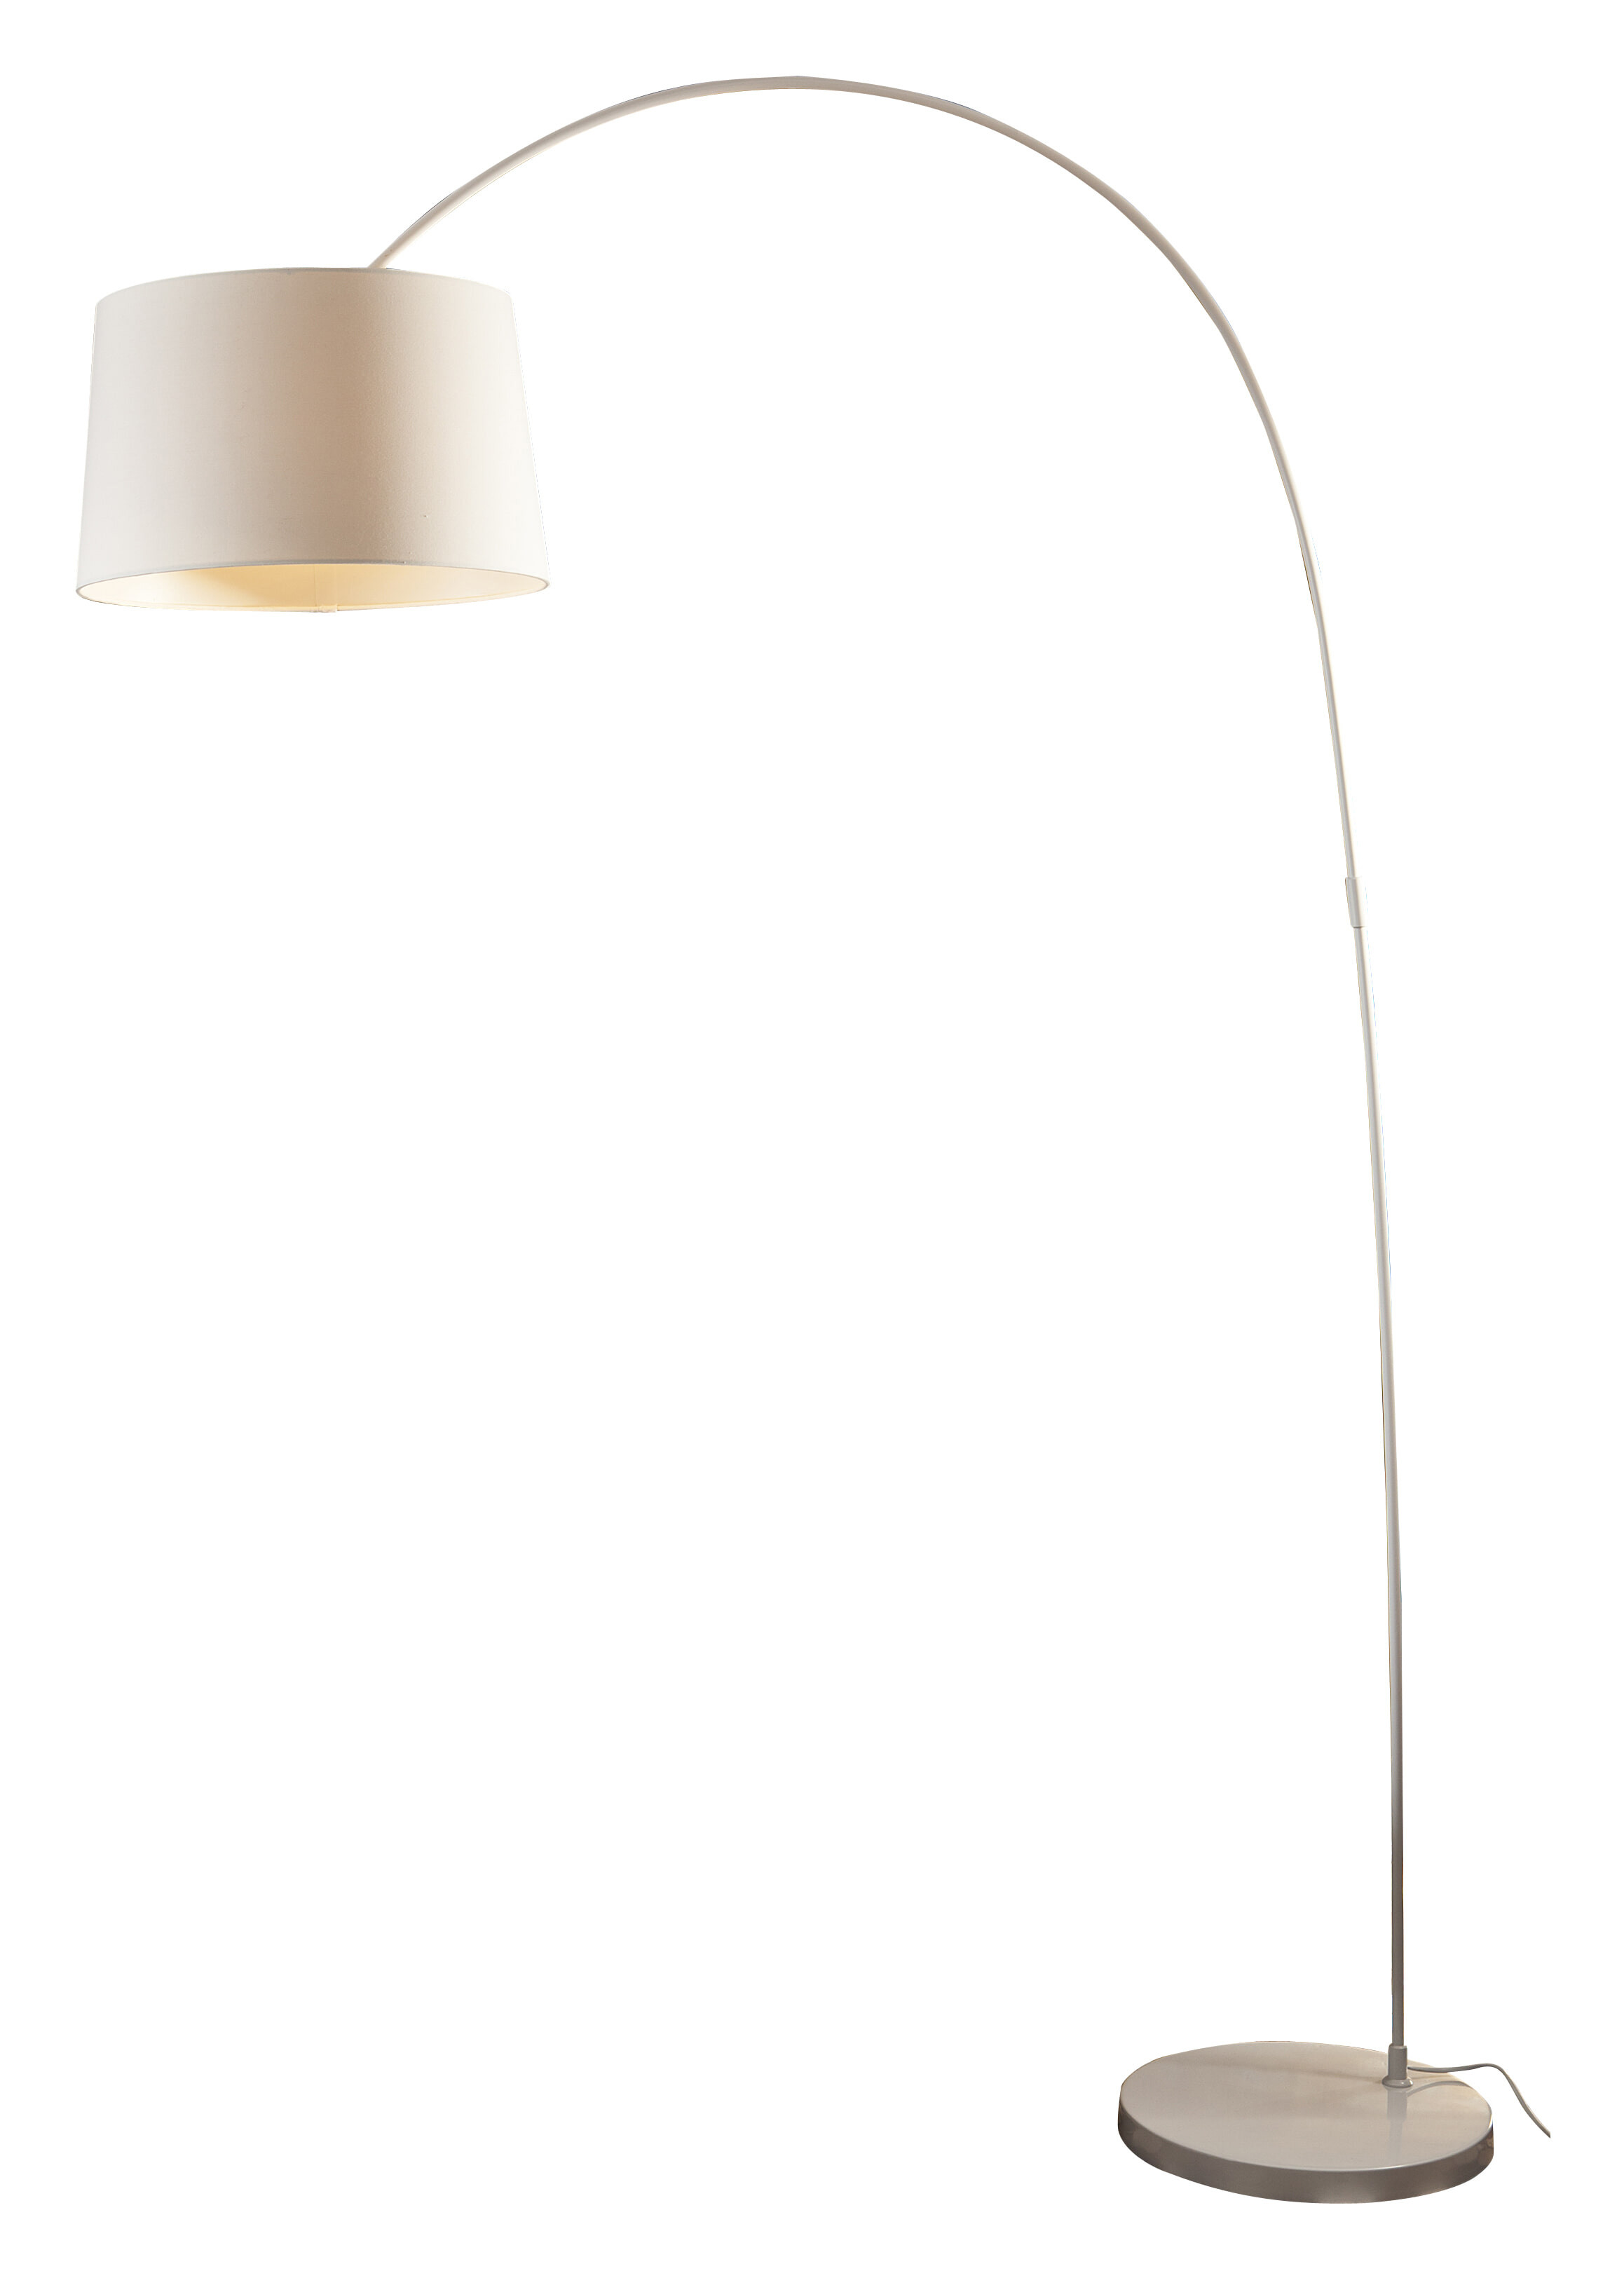 Artistiq Vloerlamp 'Kellie' 205cm hoog, kleur Wit